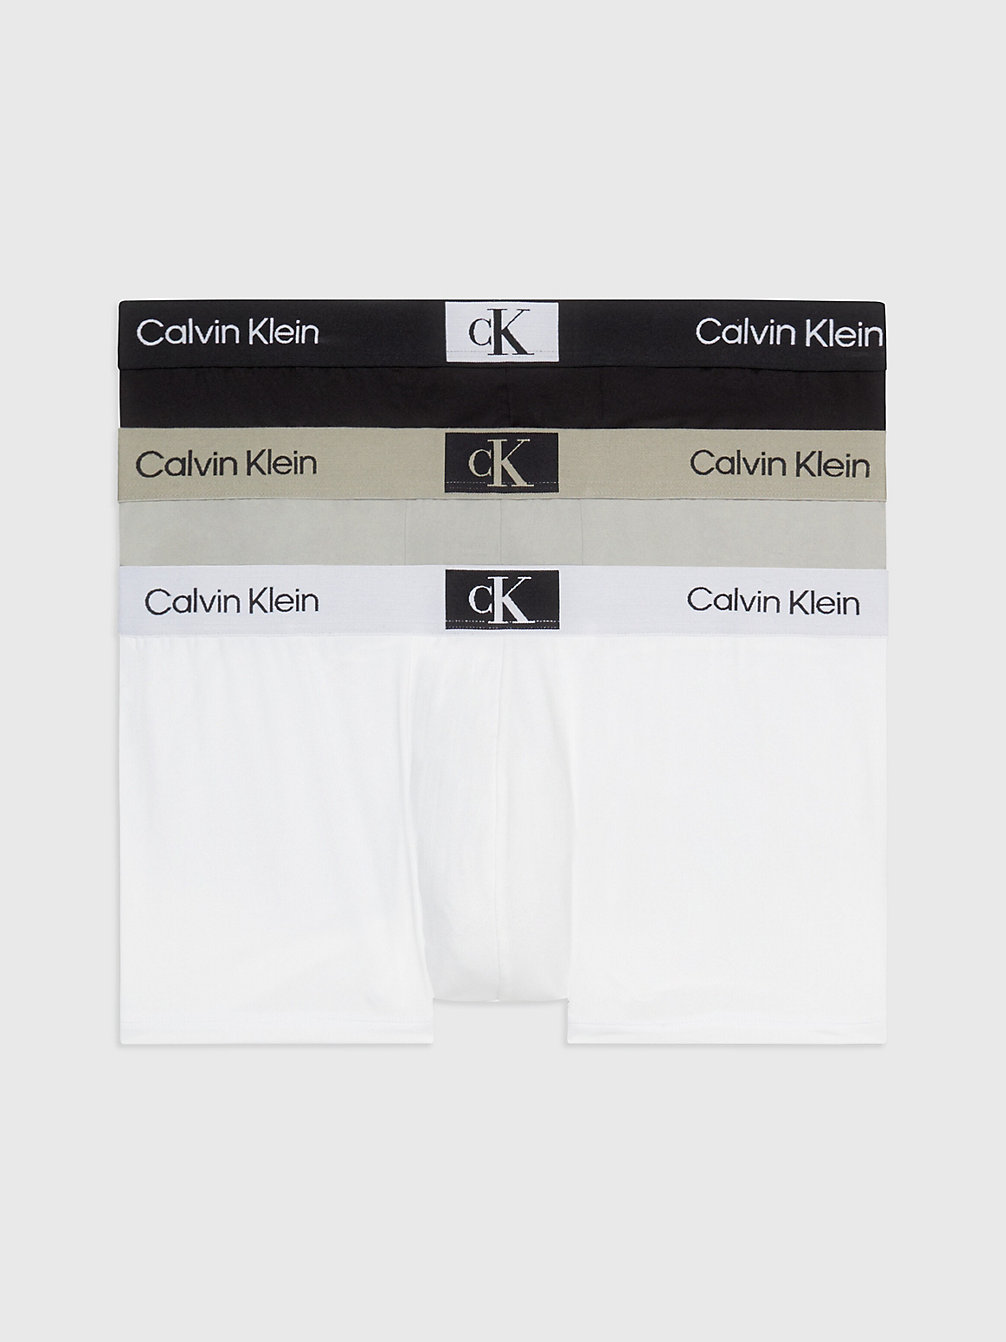 BLACK, AUTHENTIC GREY, WHITE > Zestaw 3 Par Bokserek Z Niskim Stanem - Ck96 > undefined Mężczyźni - Calvin Klein